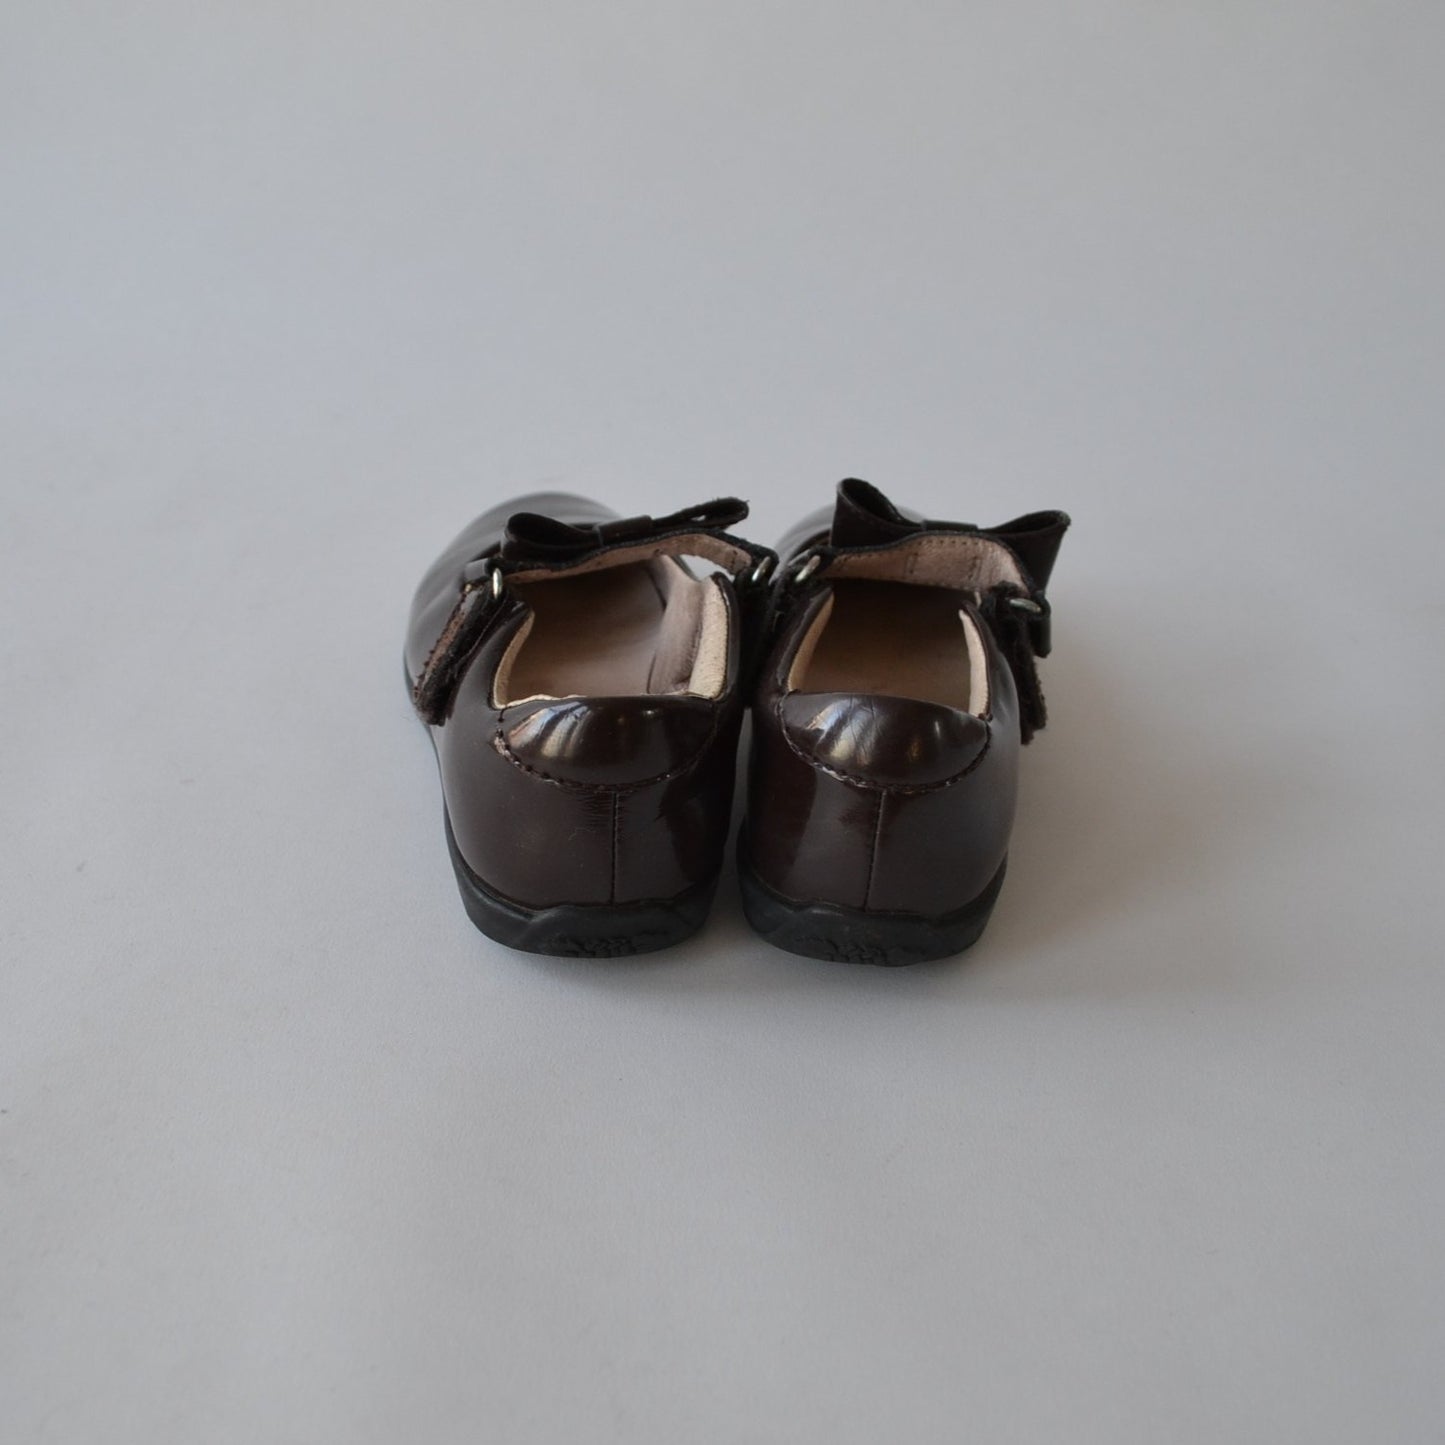 Lelli Kelly Brown Flats Shoe Size 11 (jr)